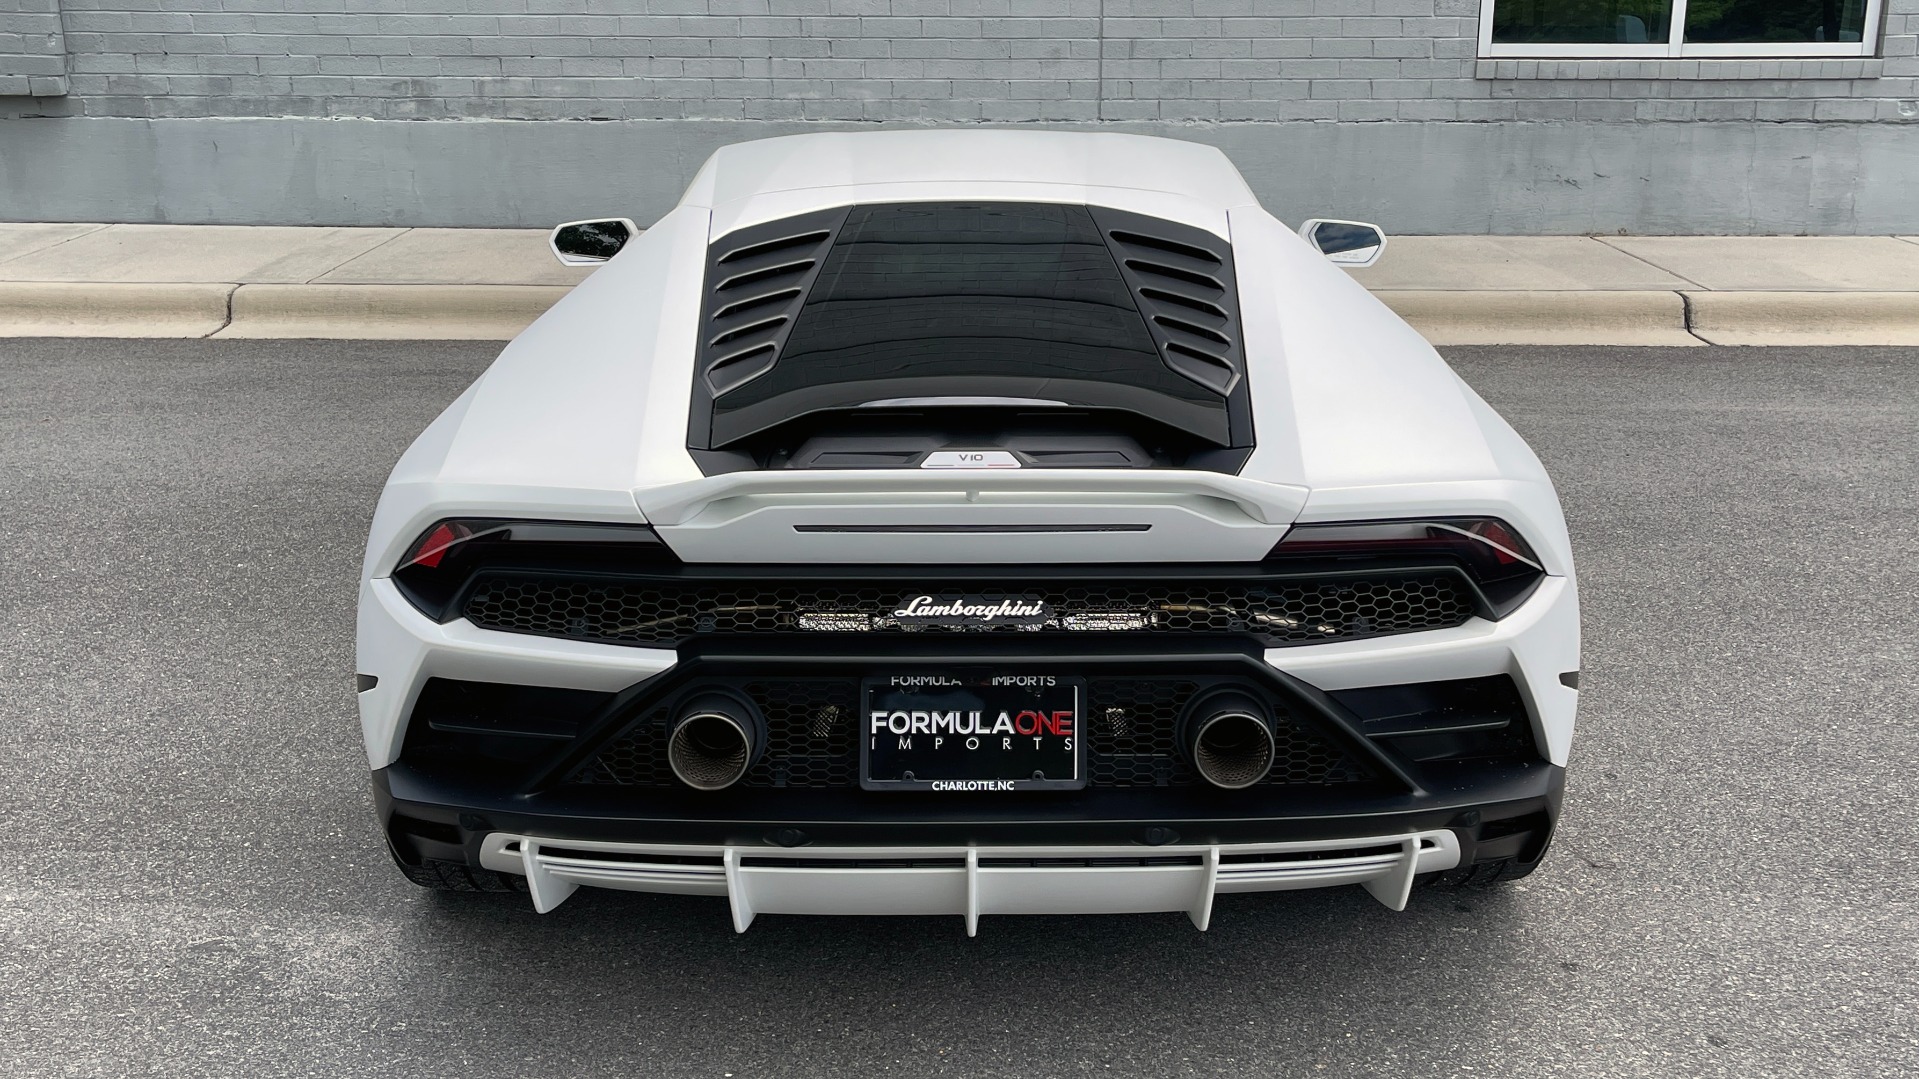 Used 2020 Lamborghini HURACAN EVO LP640-4 5.2L V10 630HP / 7-SPD AUTO / AWD / NAVIGATION / CAMERA for sale $339,000 at Formula Imports in Charlotte NC 28227 11